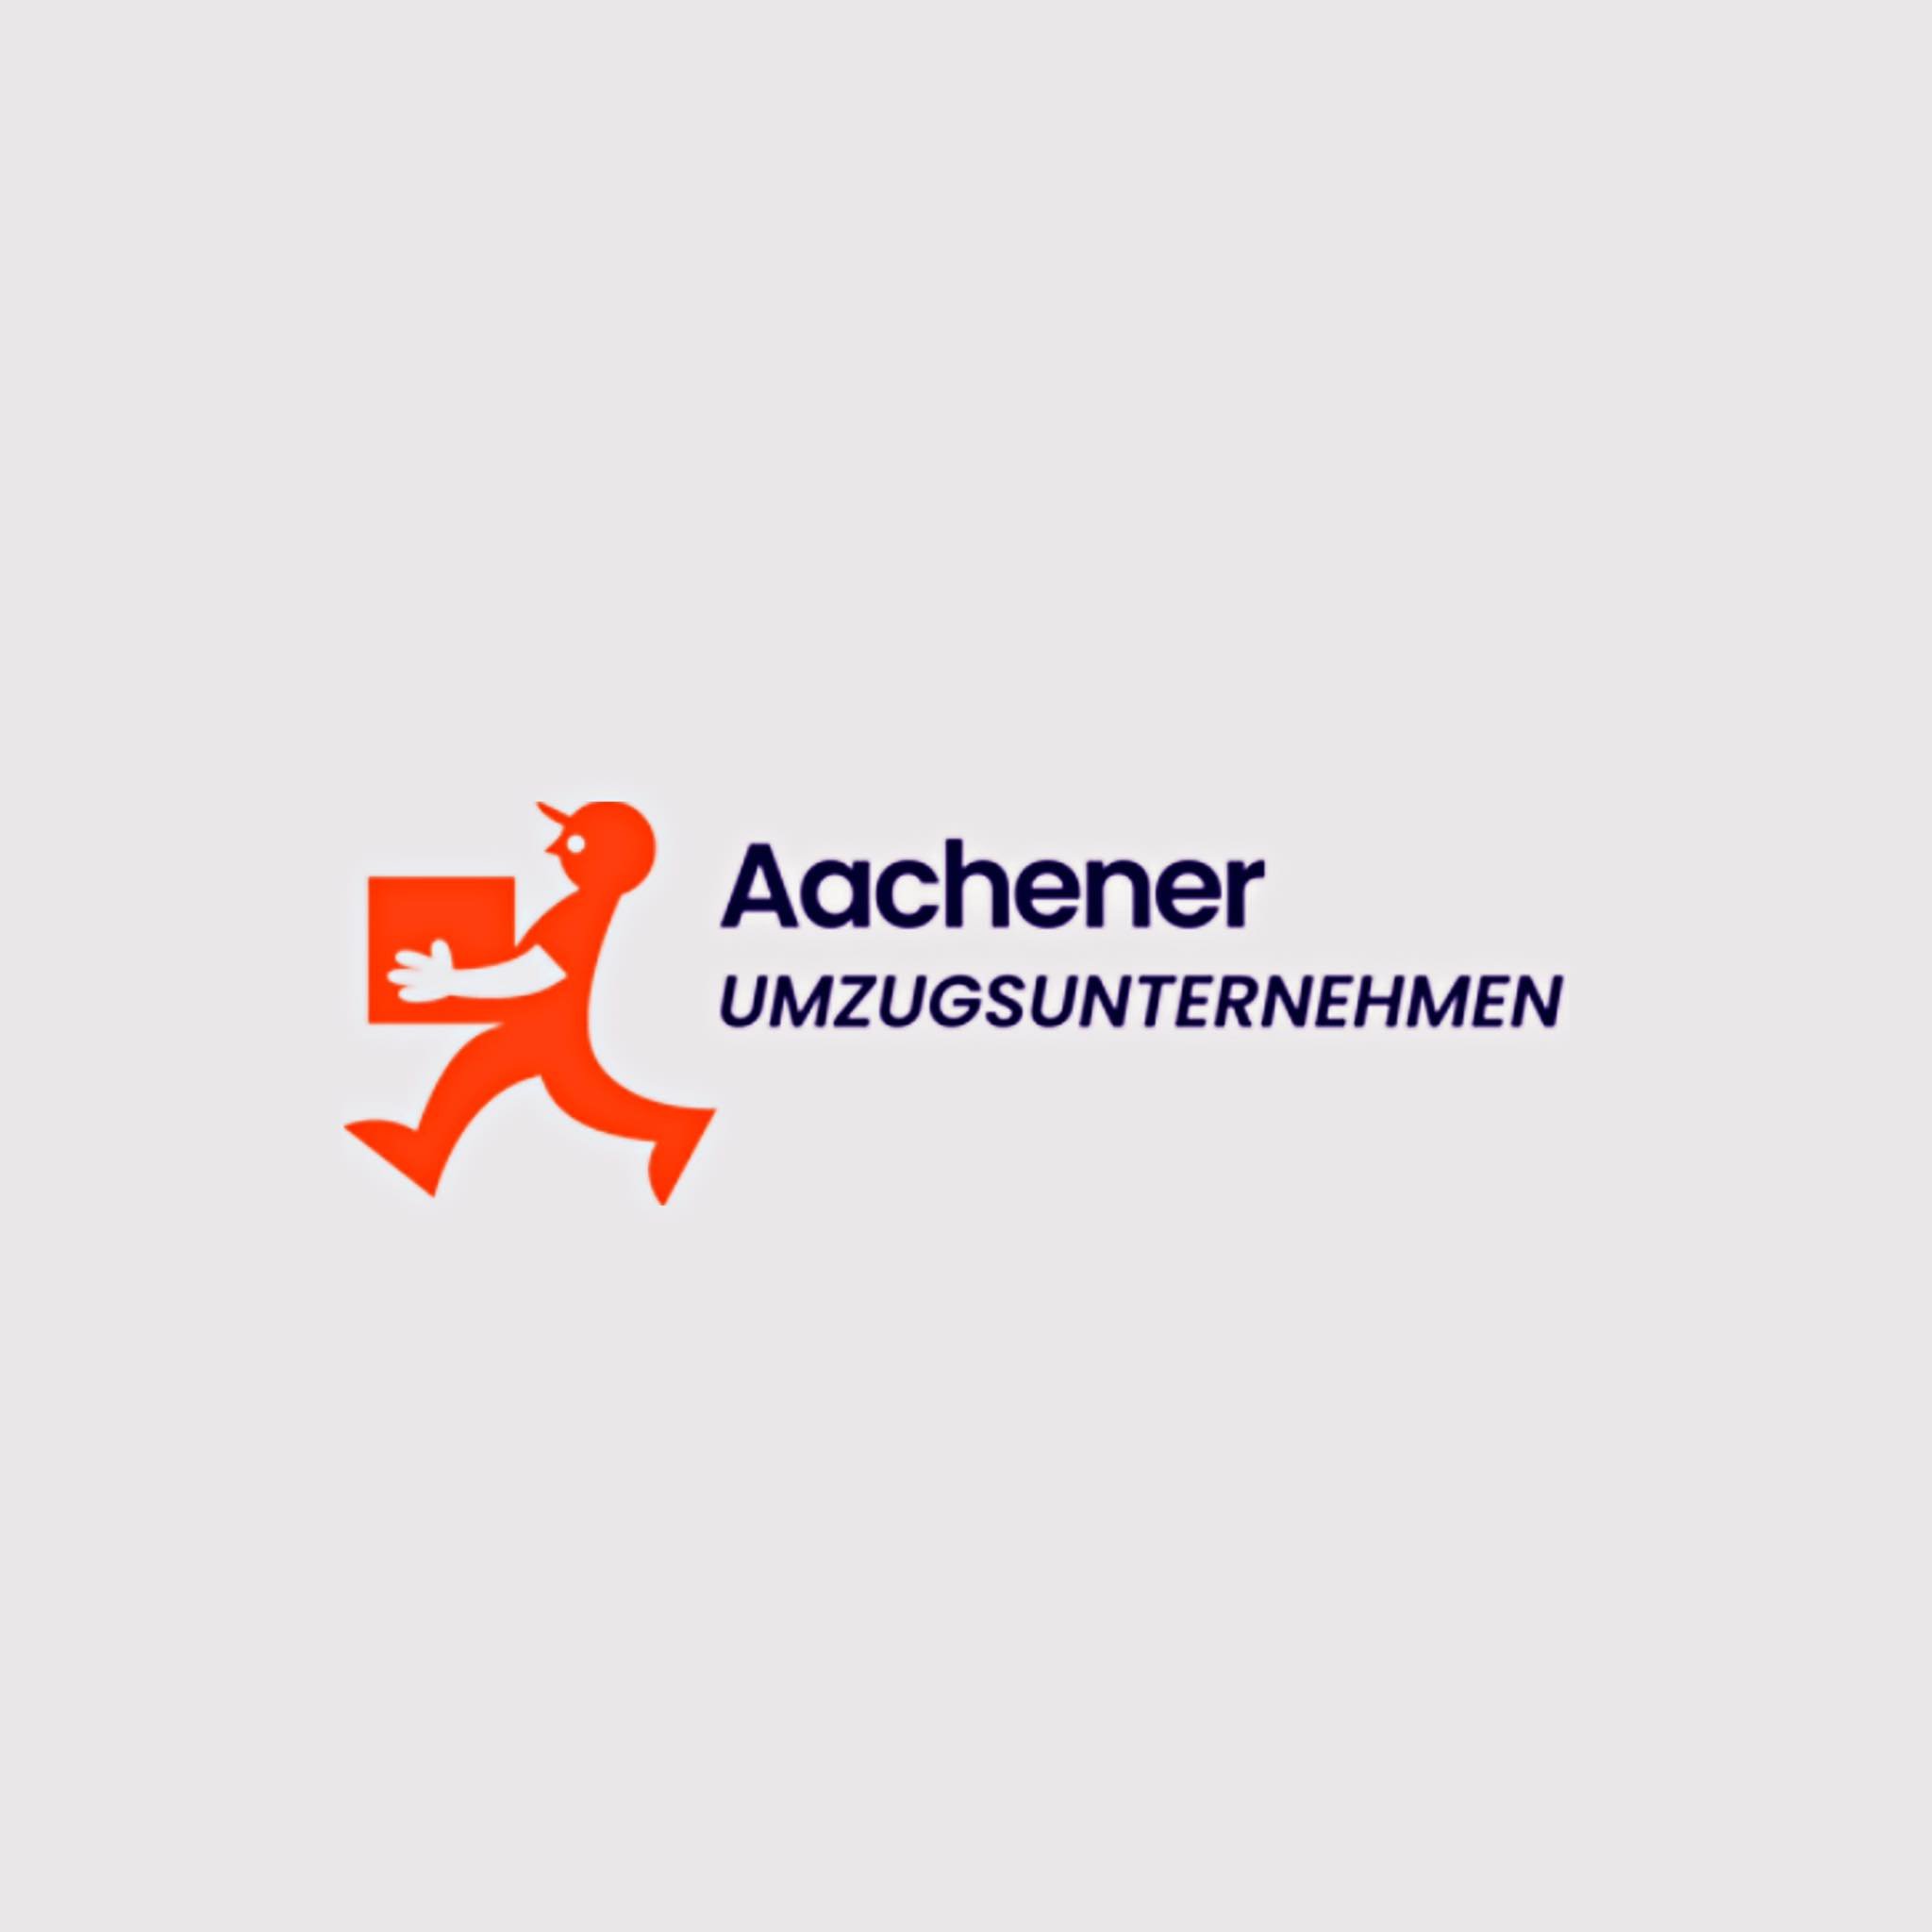 Aachener Umzugsunternehmen cover